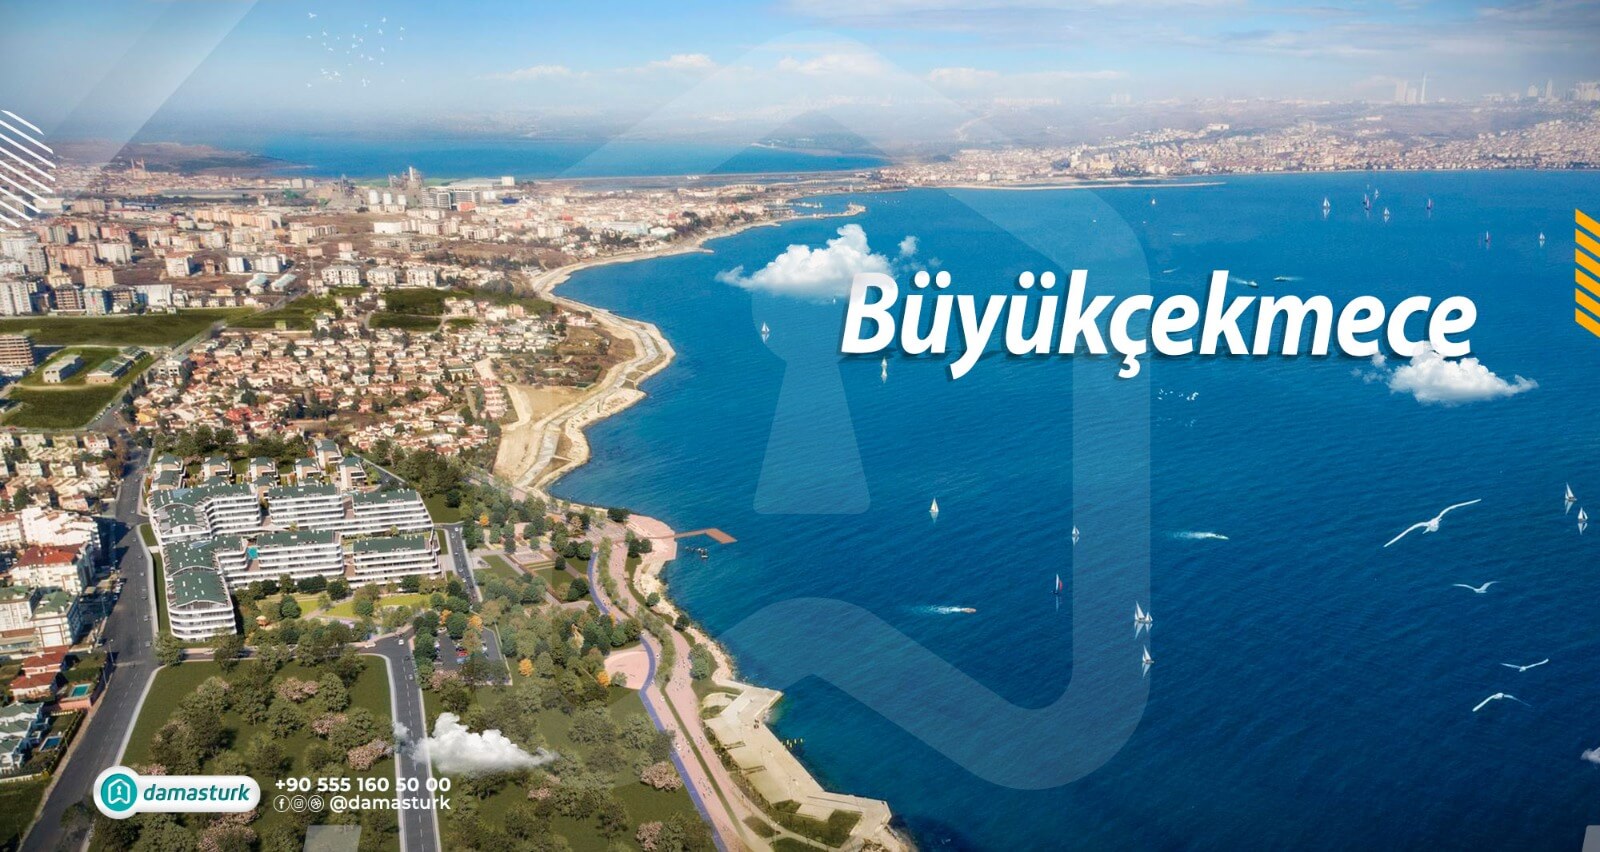 Büyükçekmece apartments for sale and places to visit in 2022 